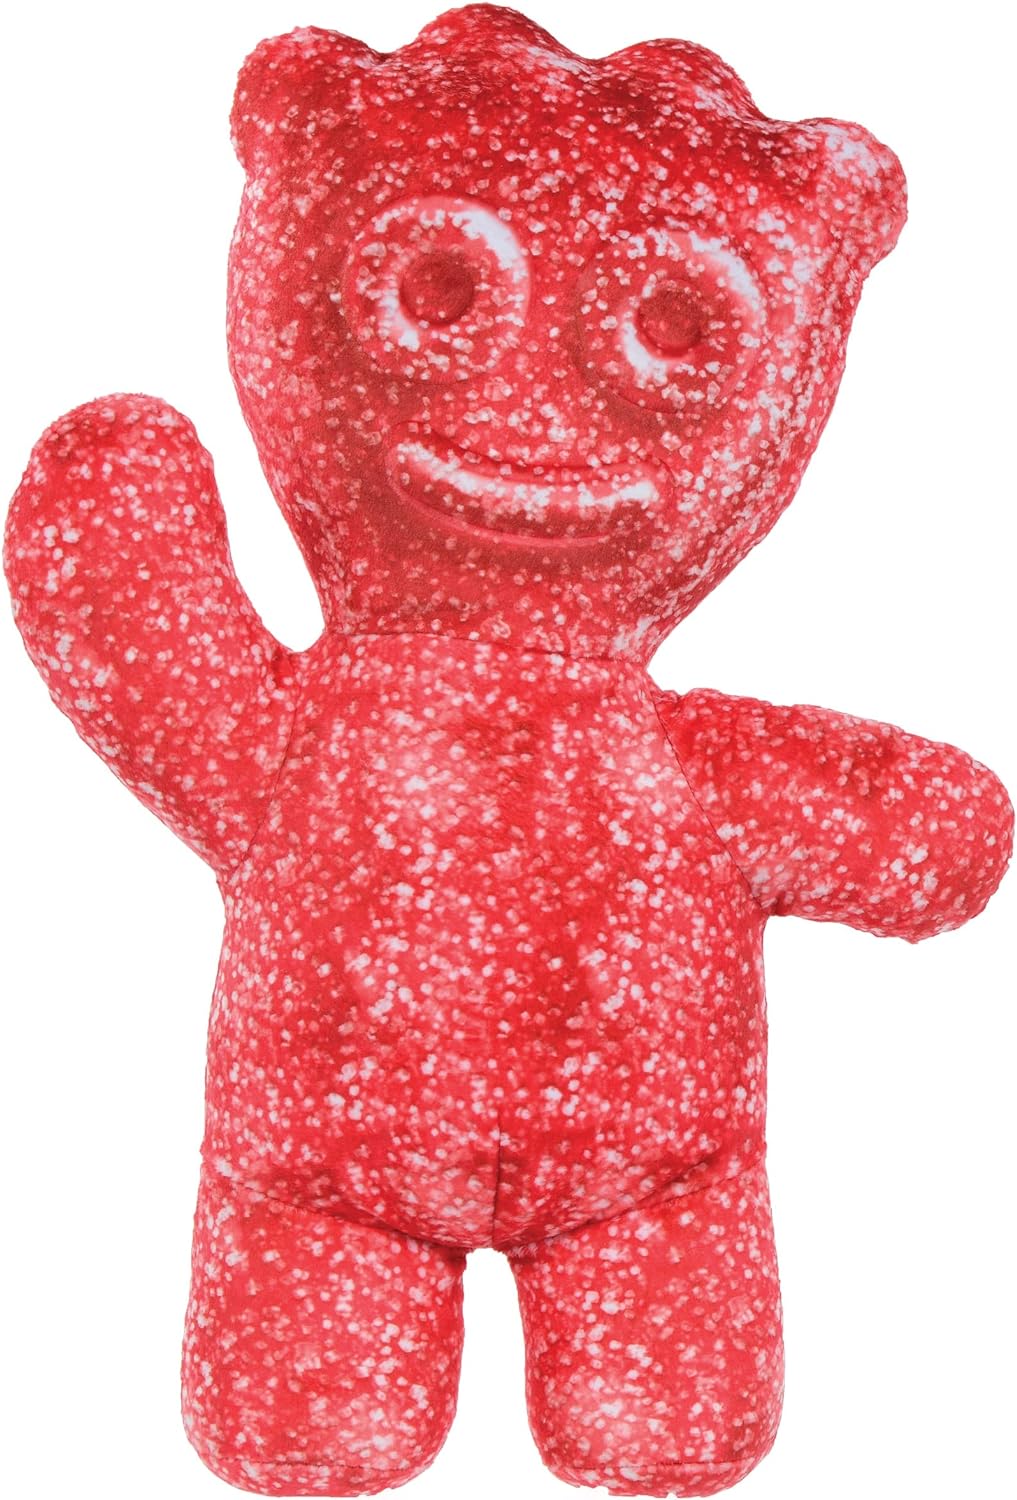 Mini Sour Patch Kids Red Plush | iScream